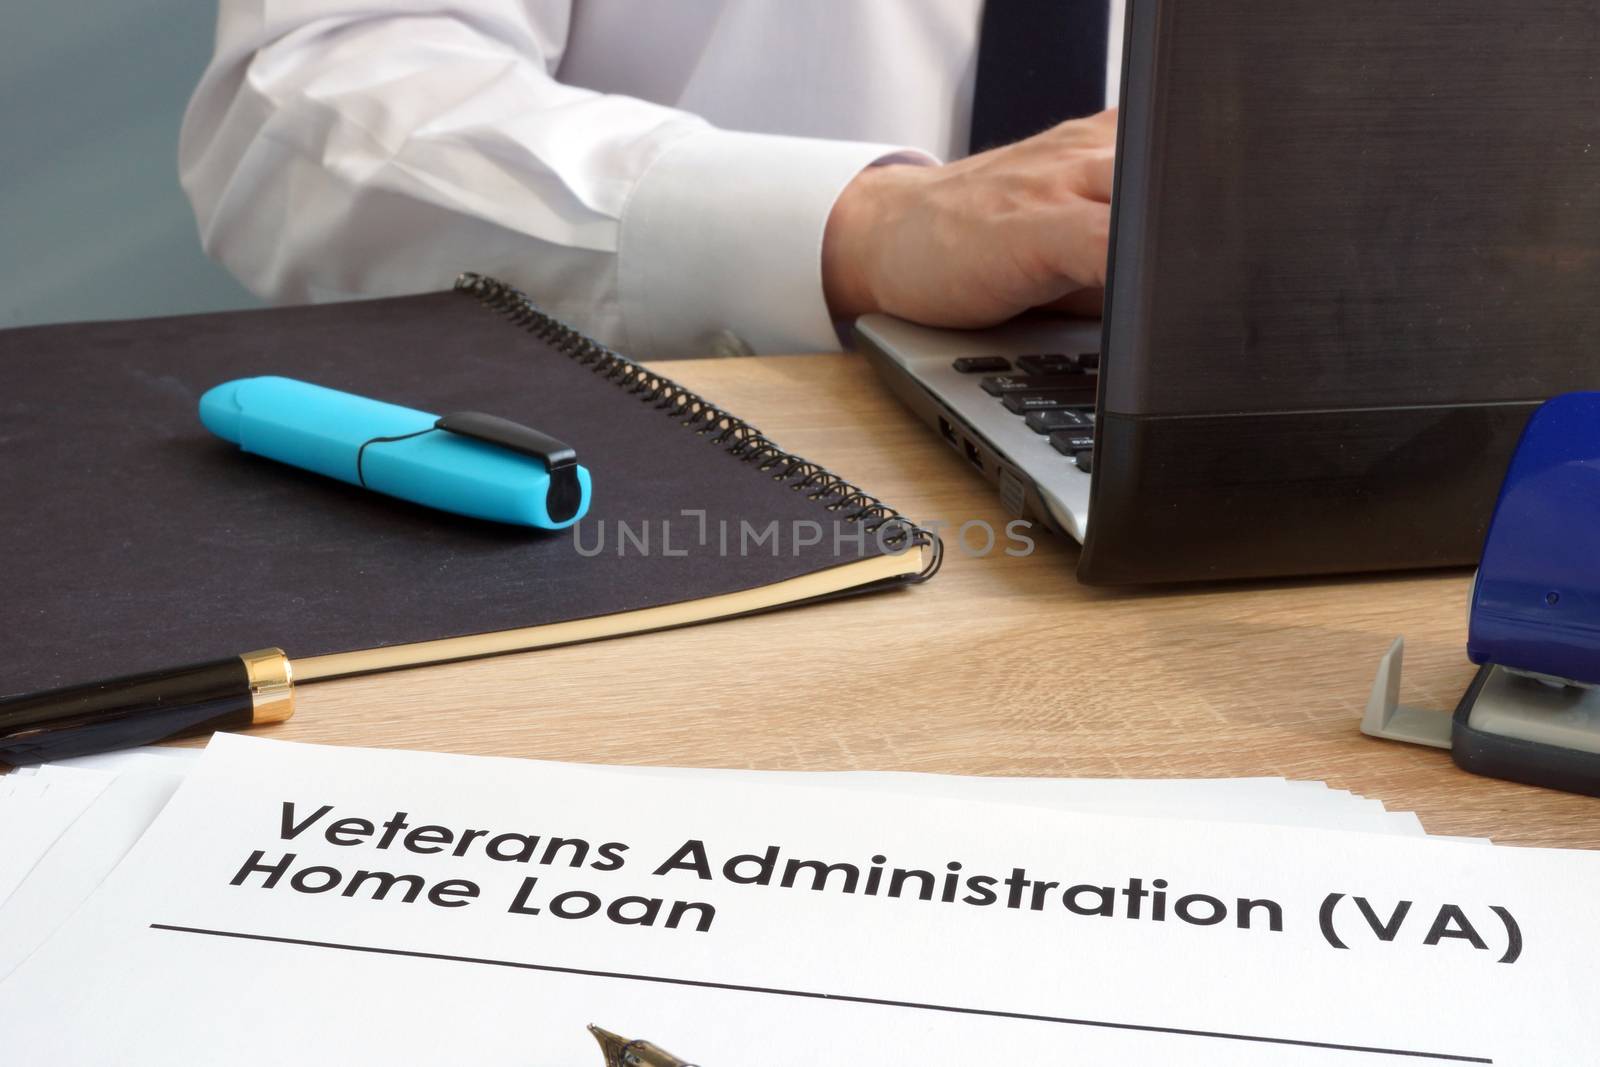 Veterans Administration (VA) Home Loan application form.